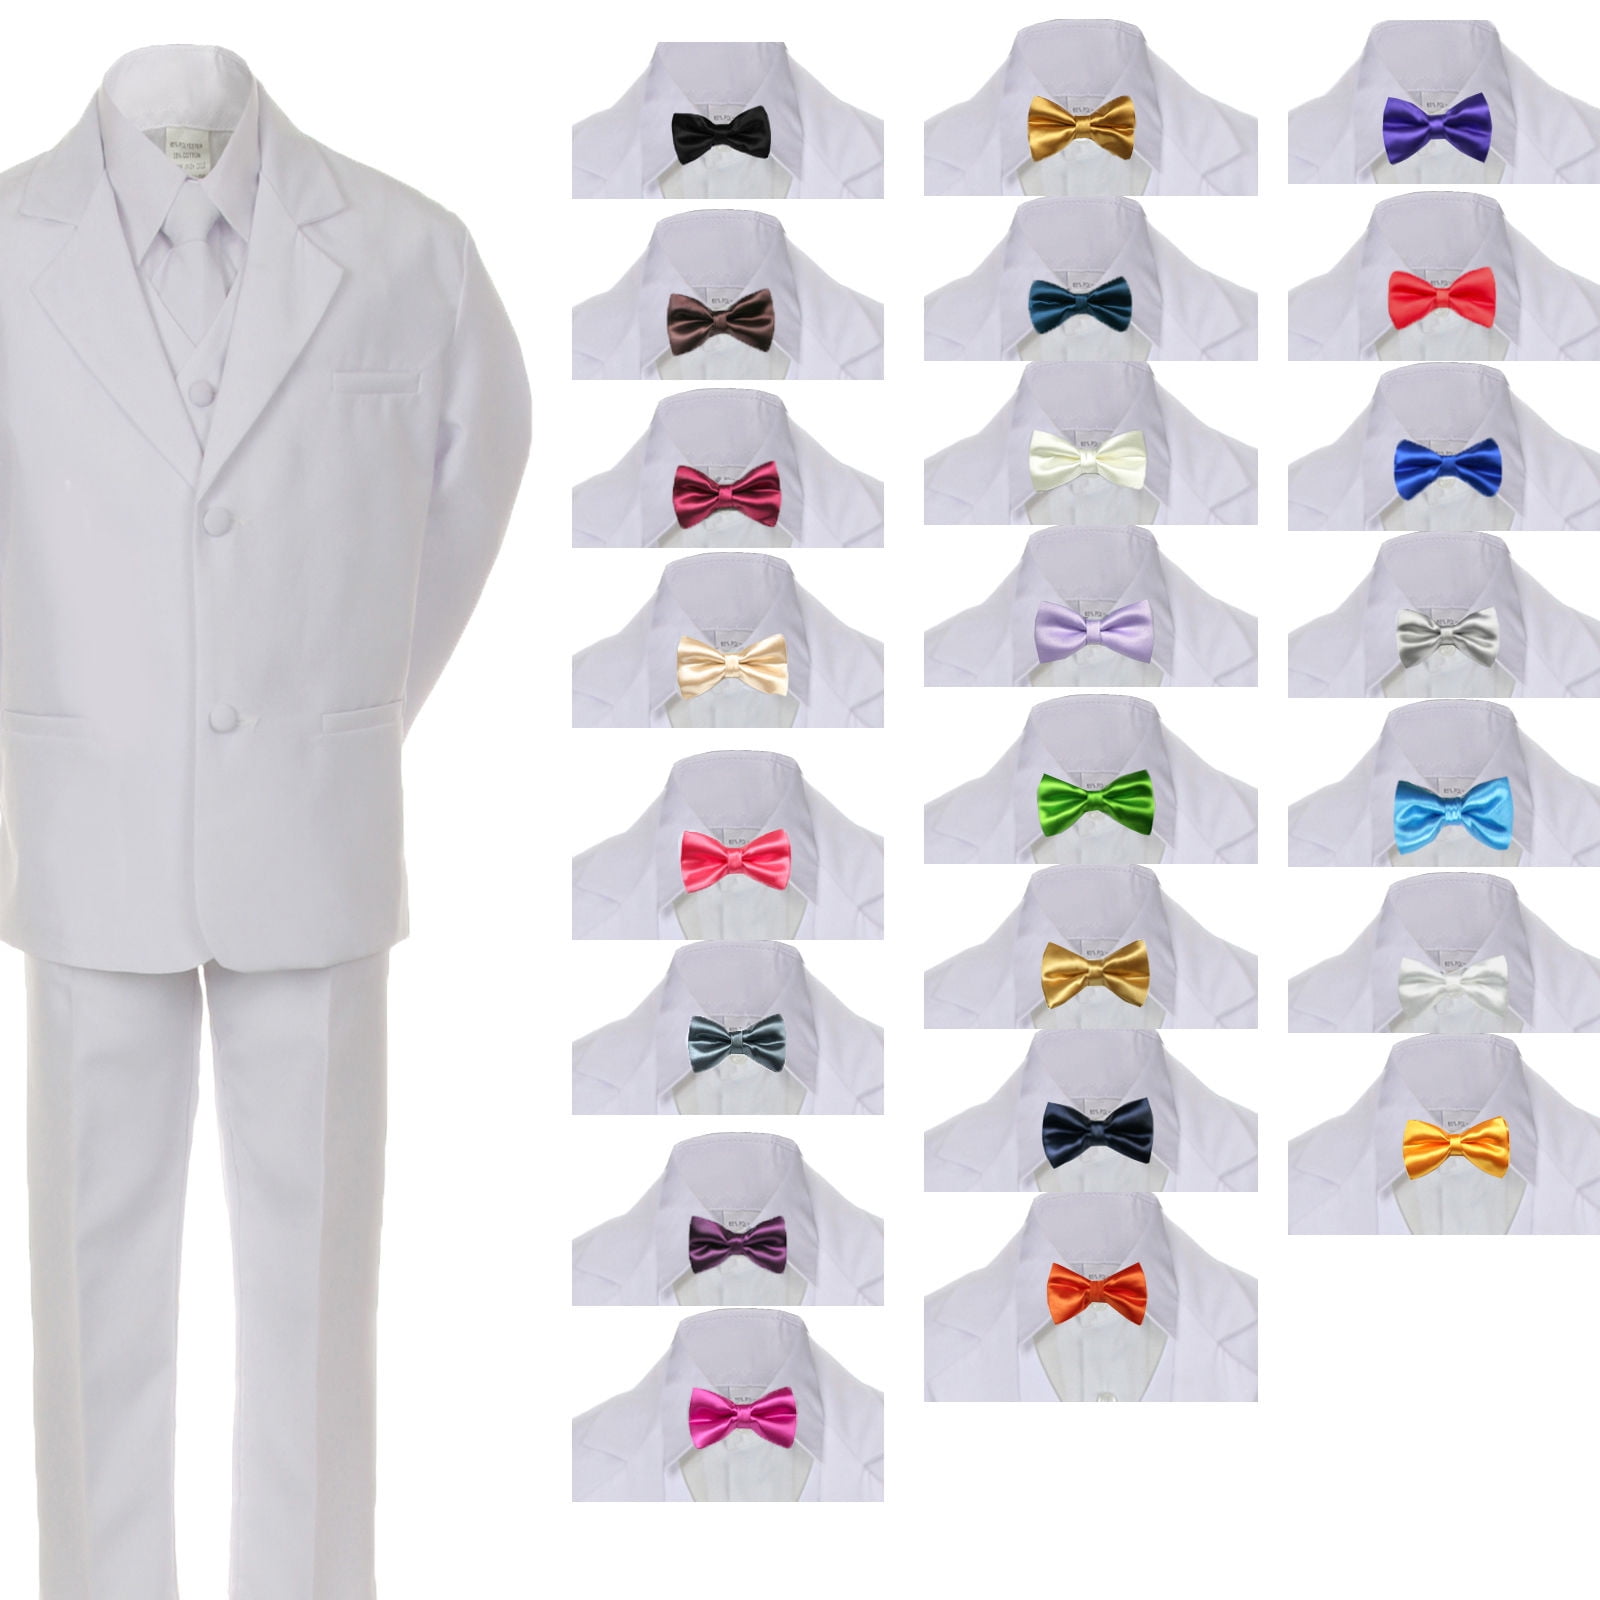 7pc Boys Baby Toddler Kid Formal Wedding White Tuxedo Suits Vest Set Bow Tie S-7 